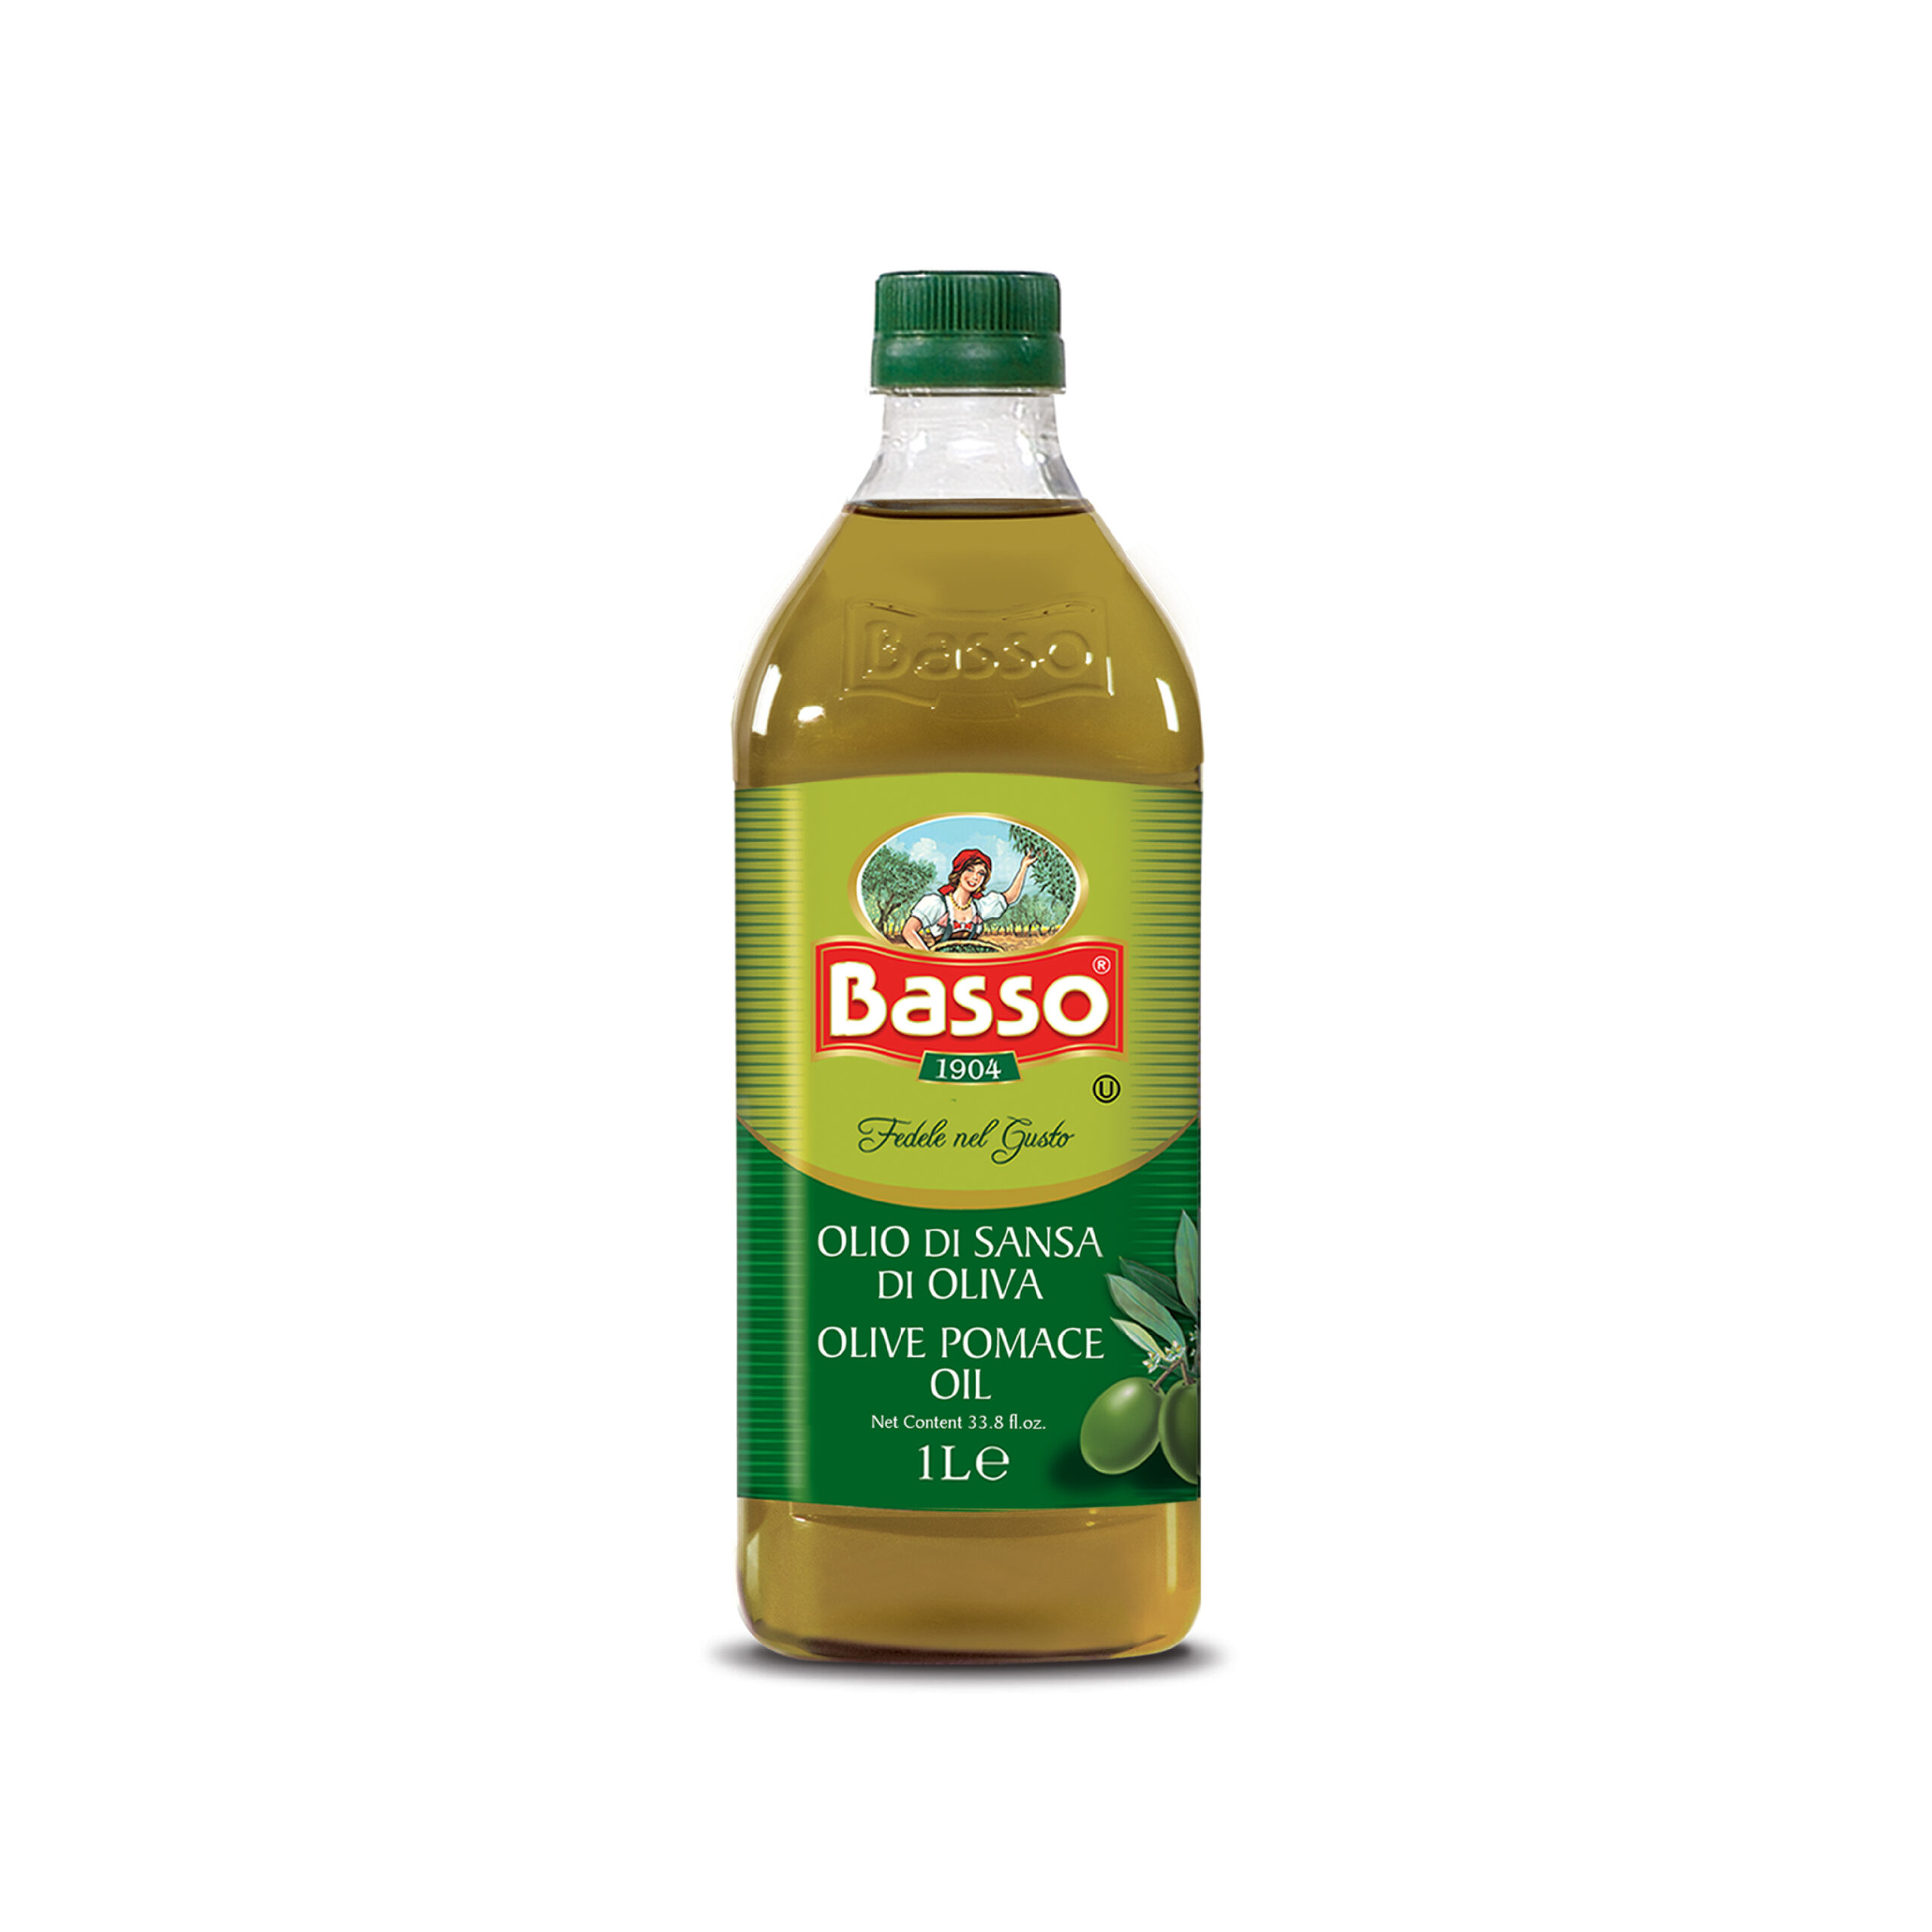 Olio di Sansa di Oliva конди. Olive Pomace Oil. Oro Espanol Pomace Olive Oil. Basso in Italian.